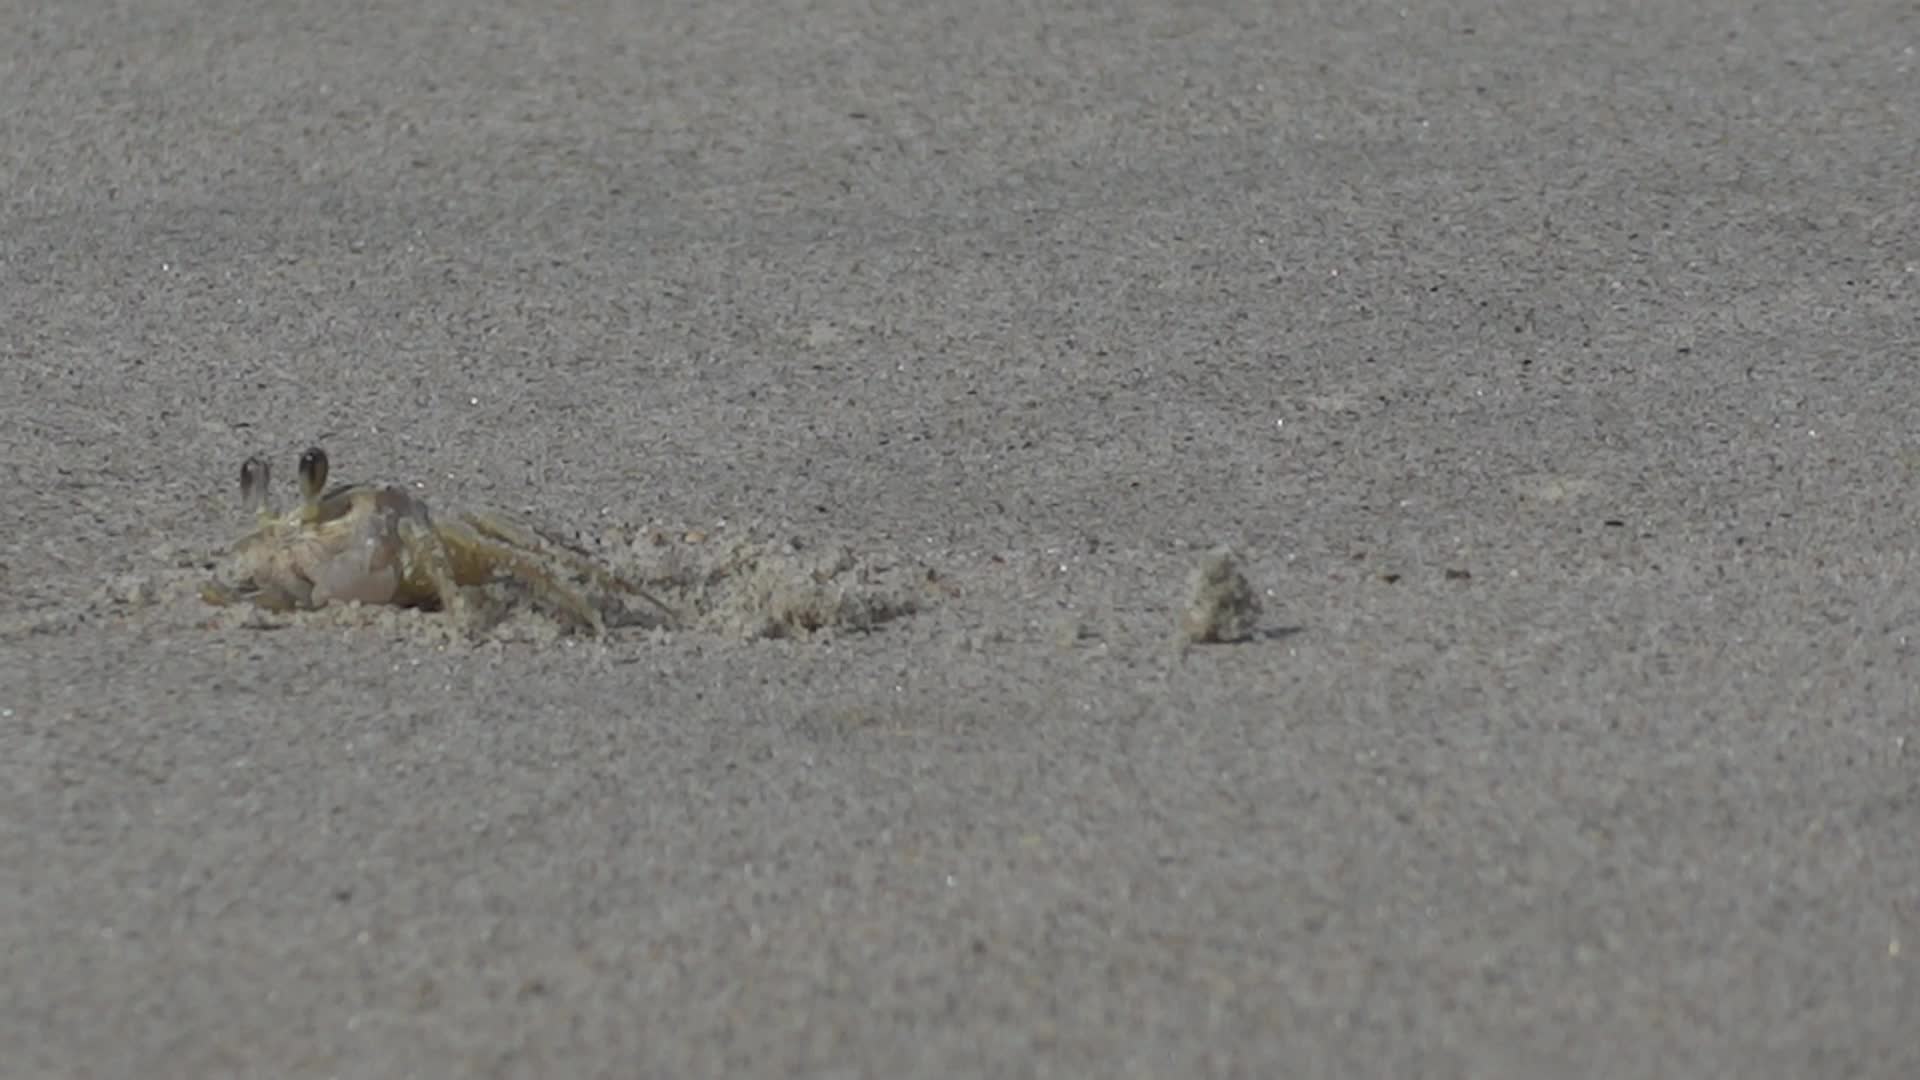 Crab on Sand Beach - Animals - 4fun.com